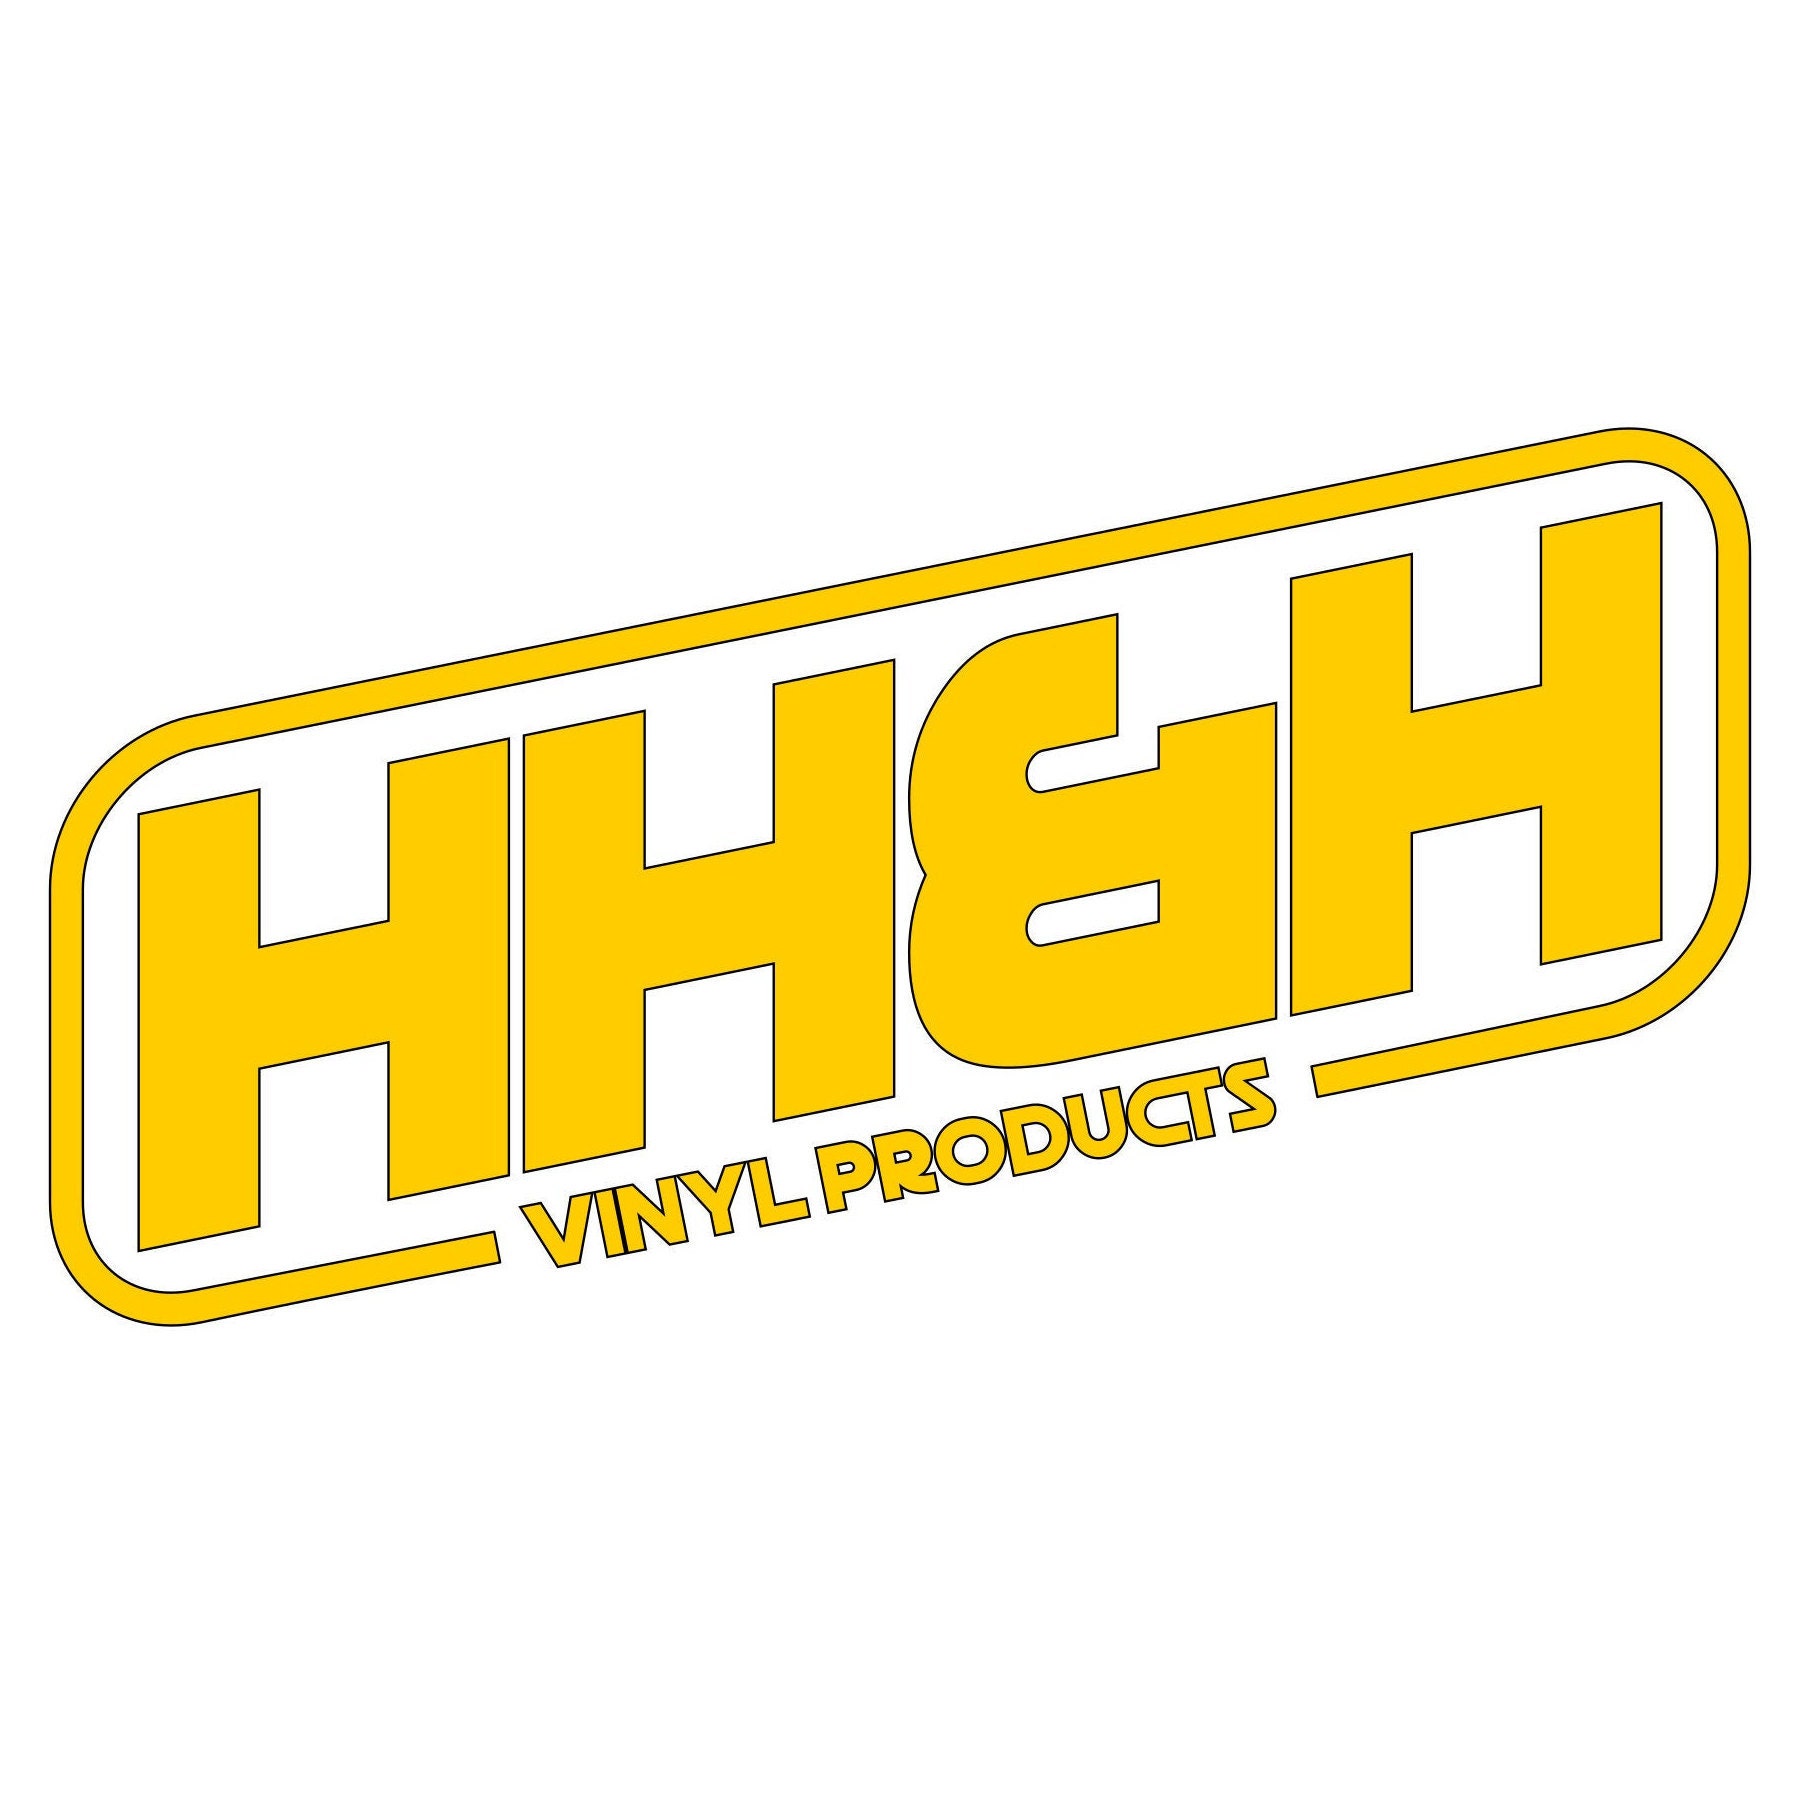 Star Wars Logo Decal 1 